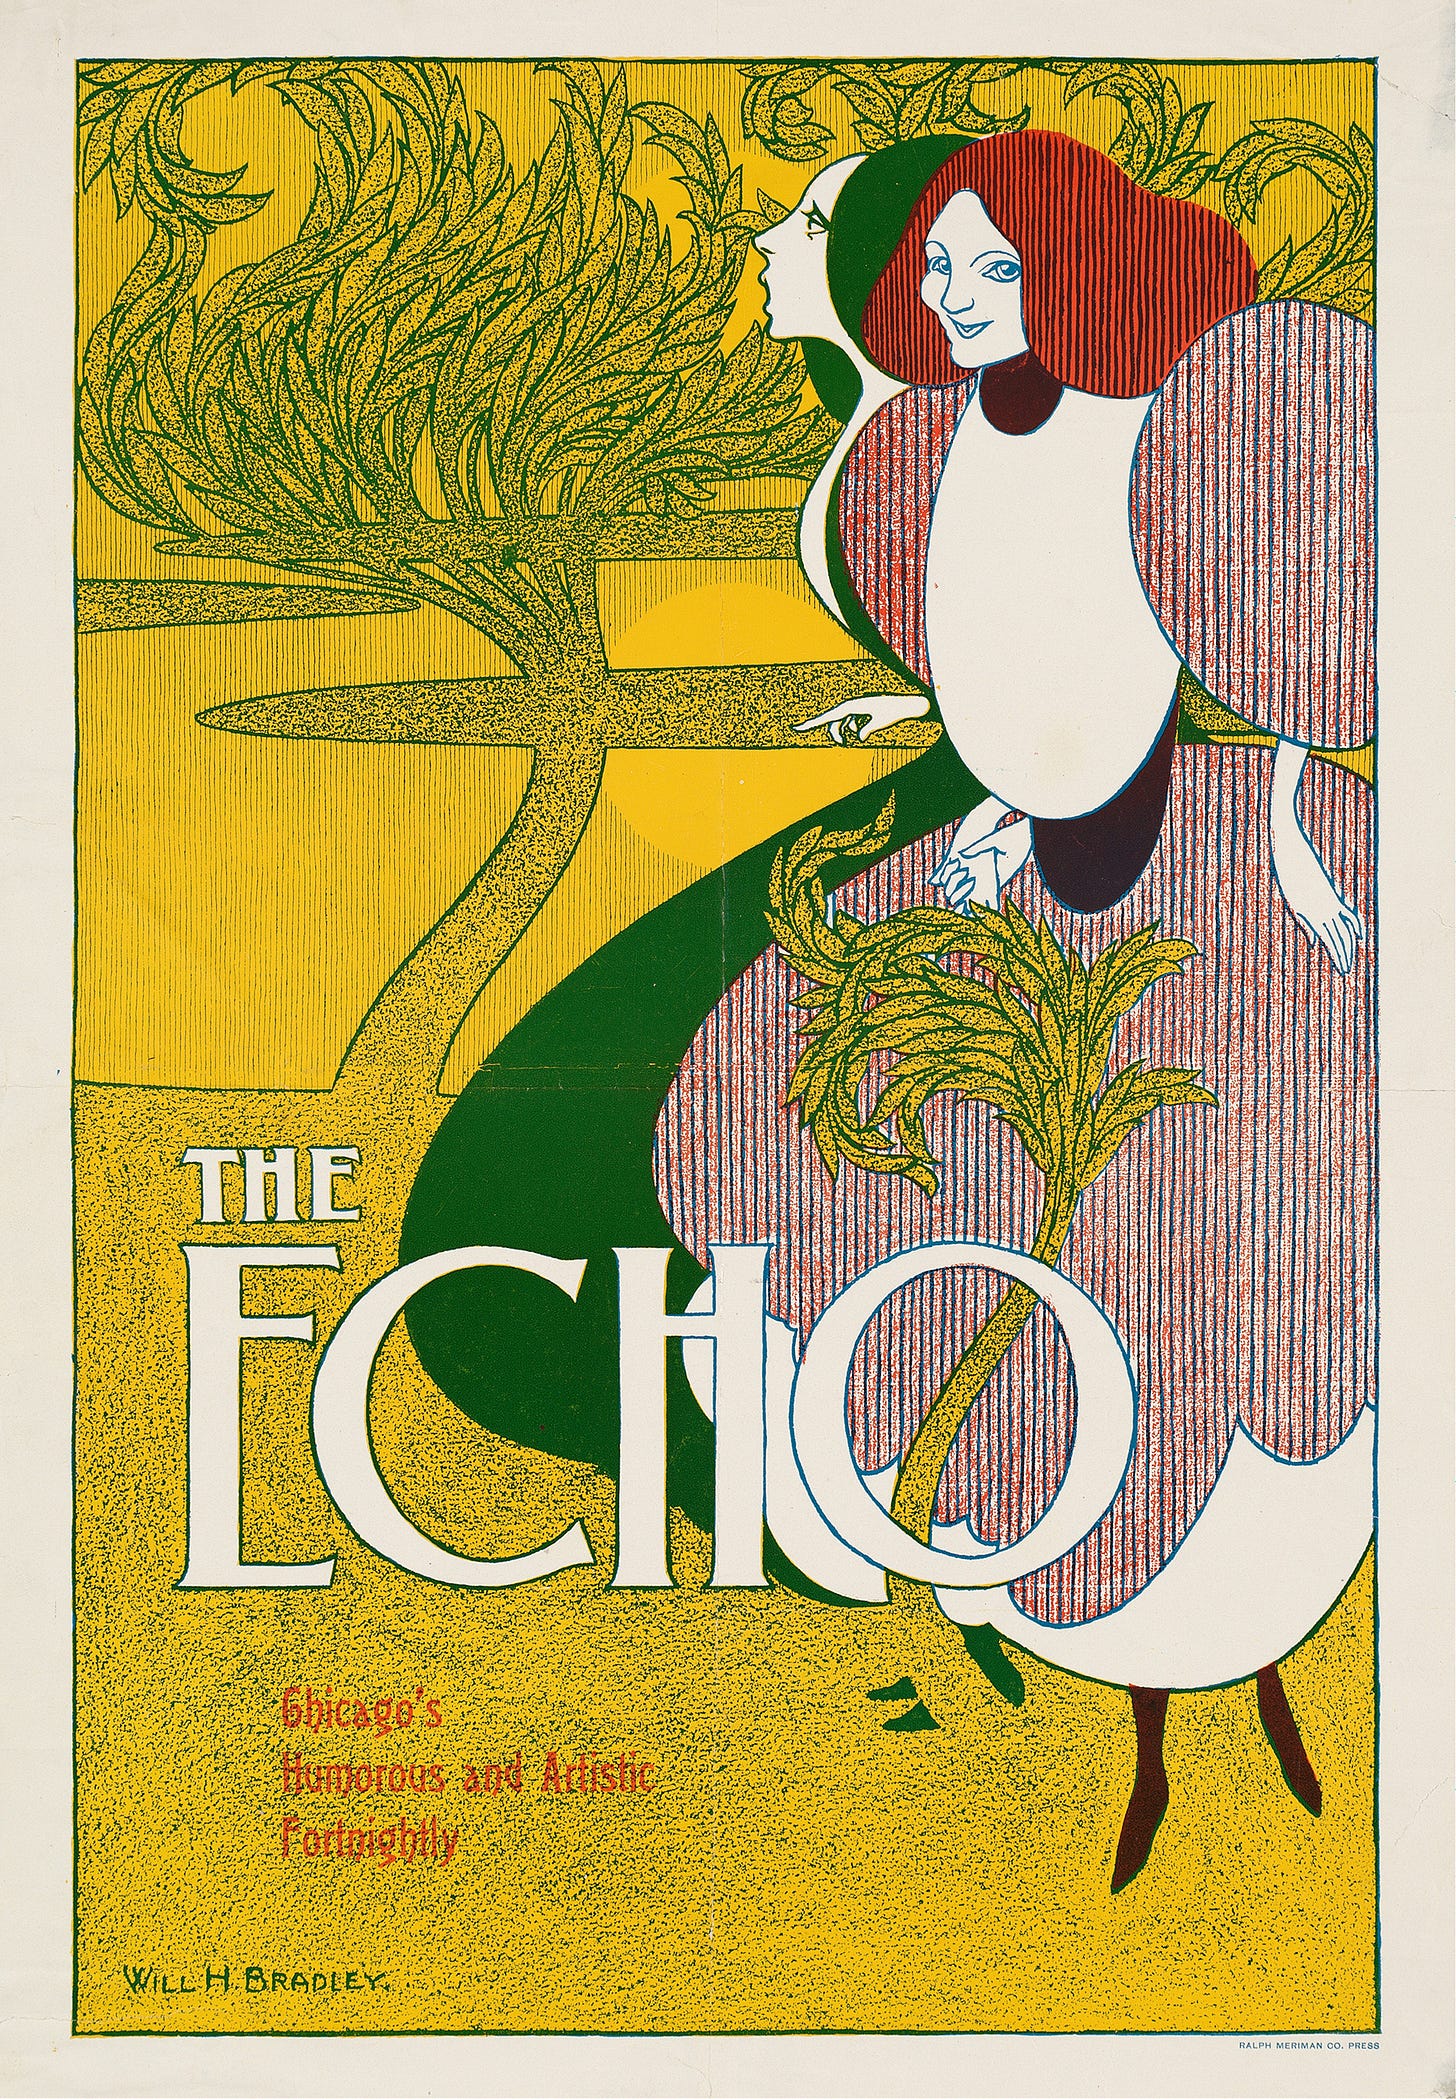 The echo (ca. 1890–1920) by Will Bradley